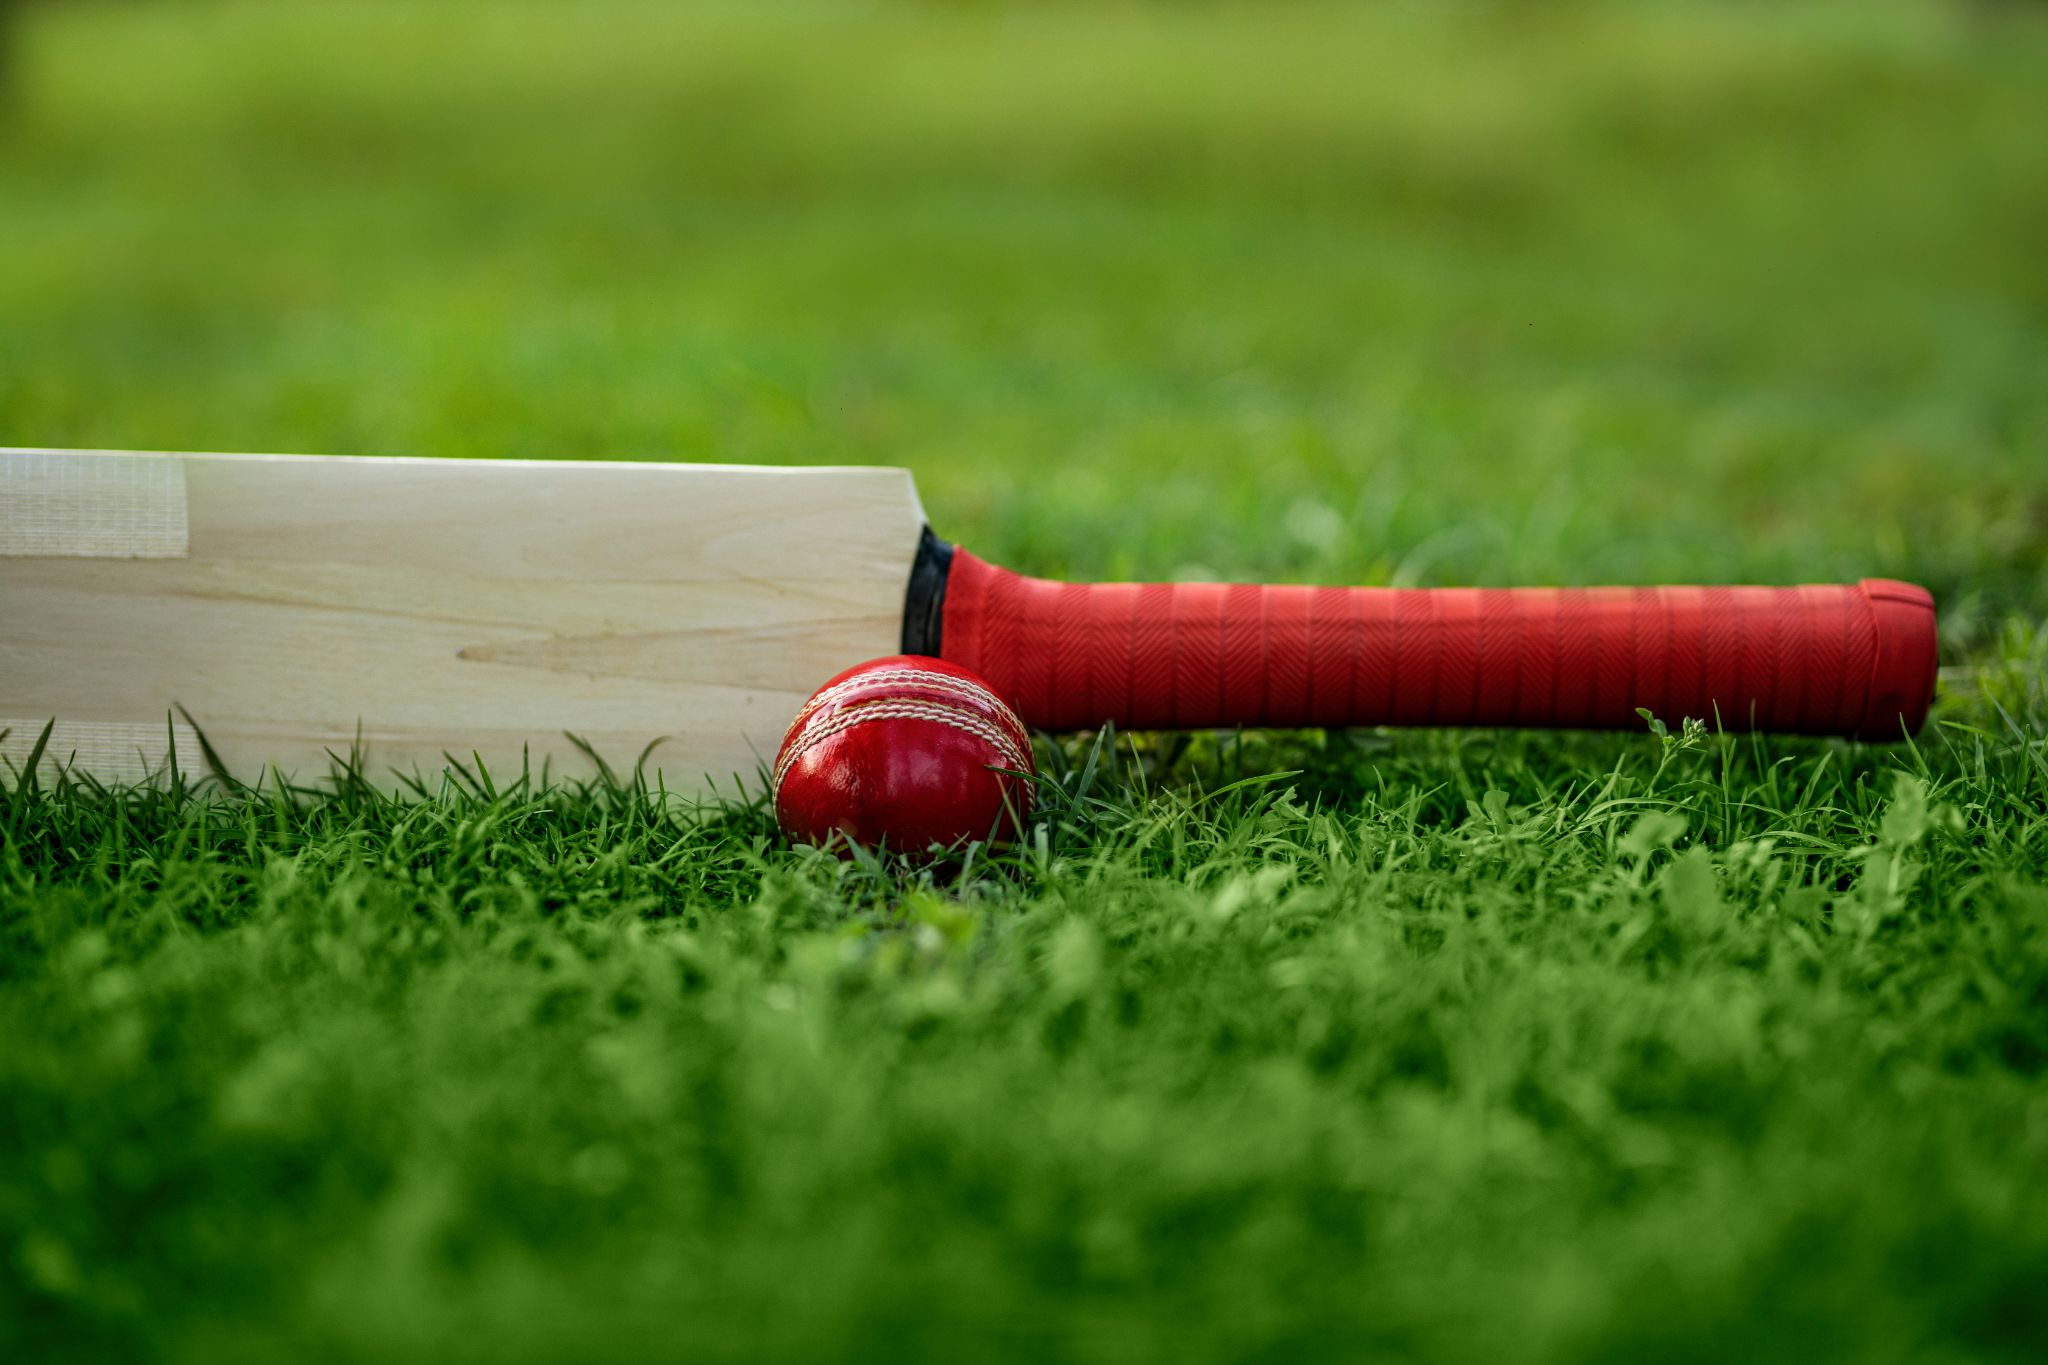 A leather cricket ball next to a cricket bat on grass